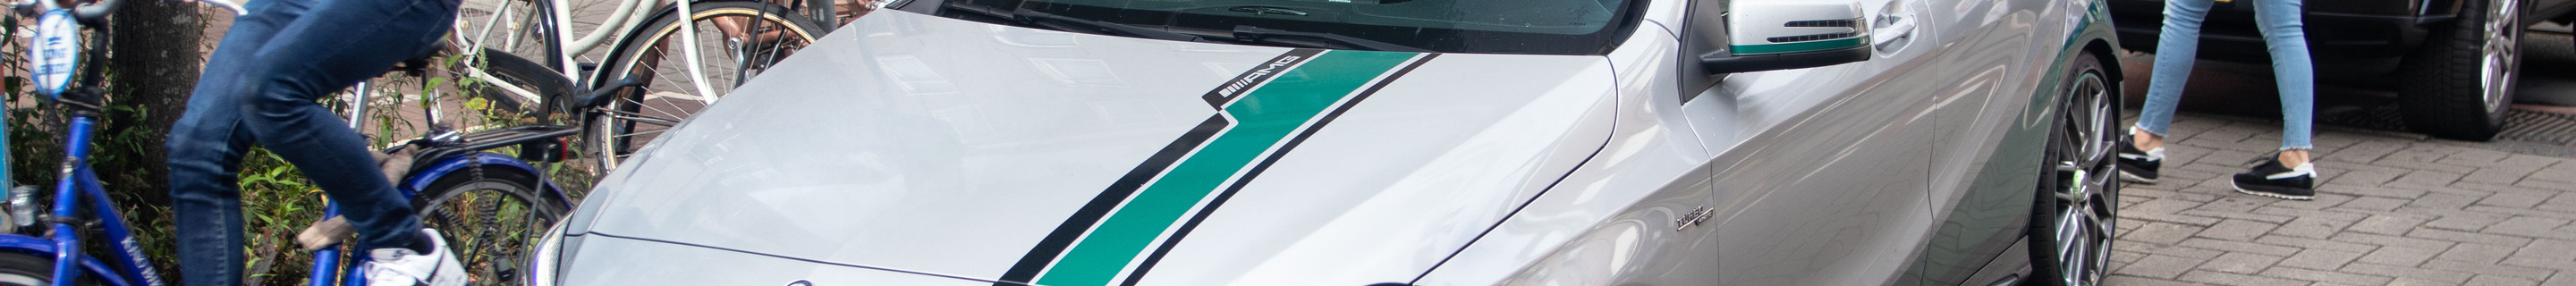 Mercedes-AMG A 45 W176 Petronas 2015 World Champions Edition